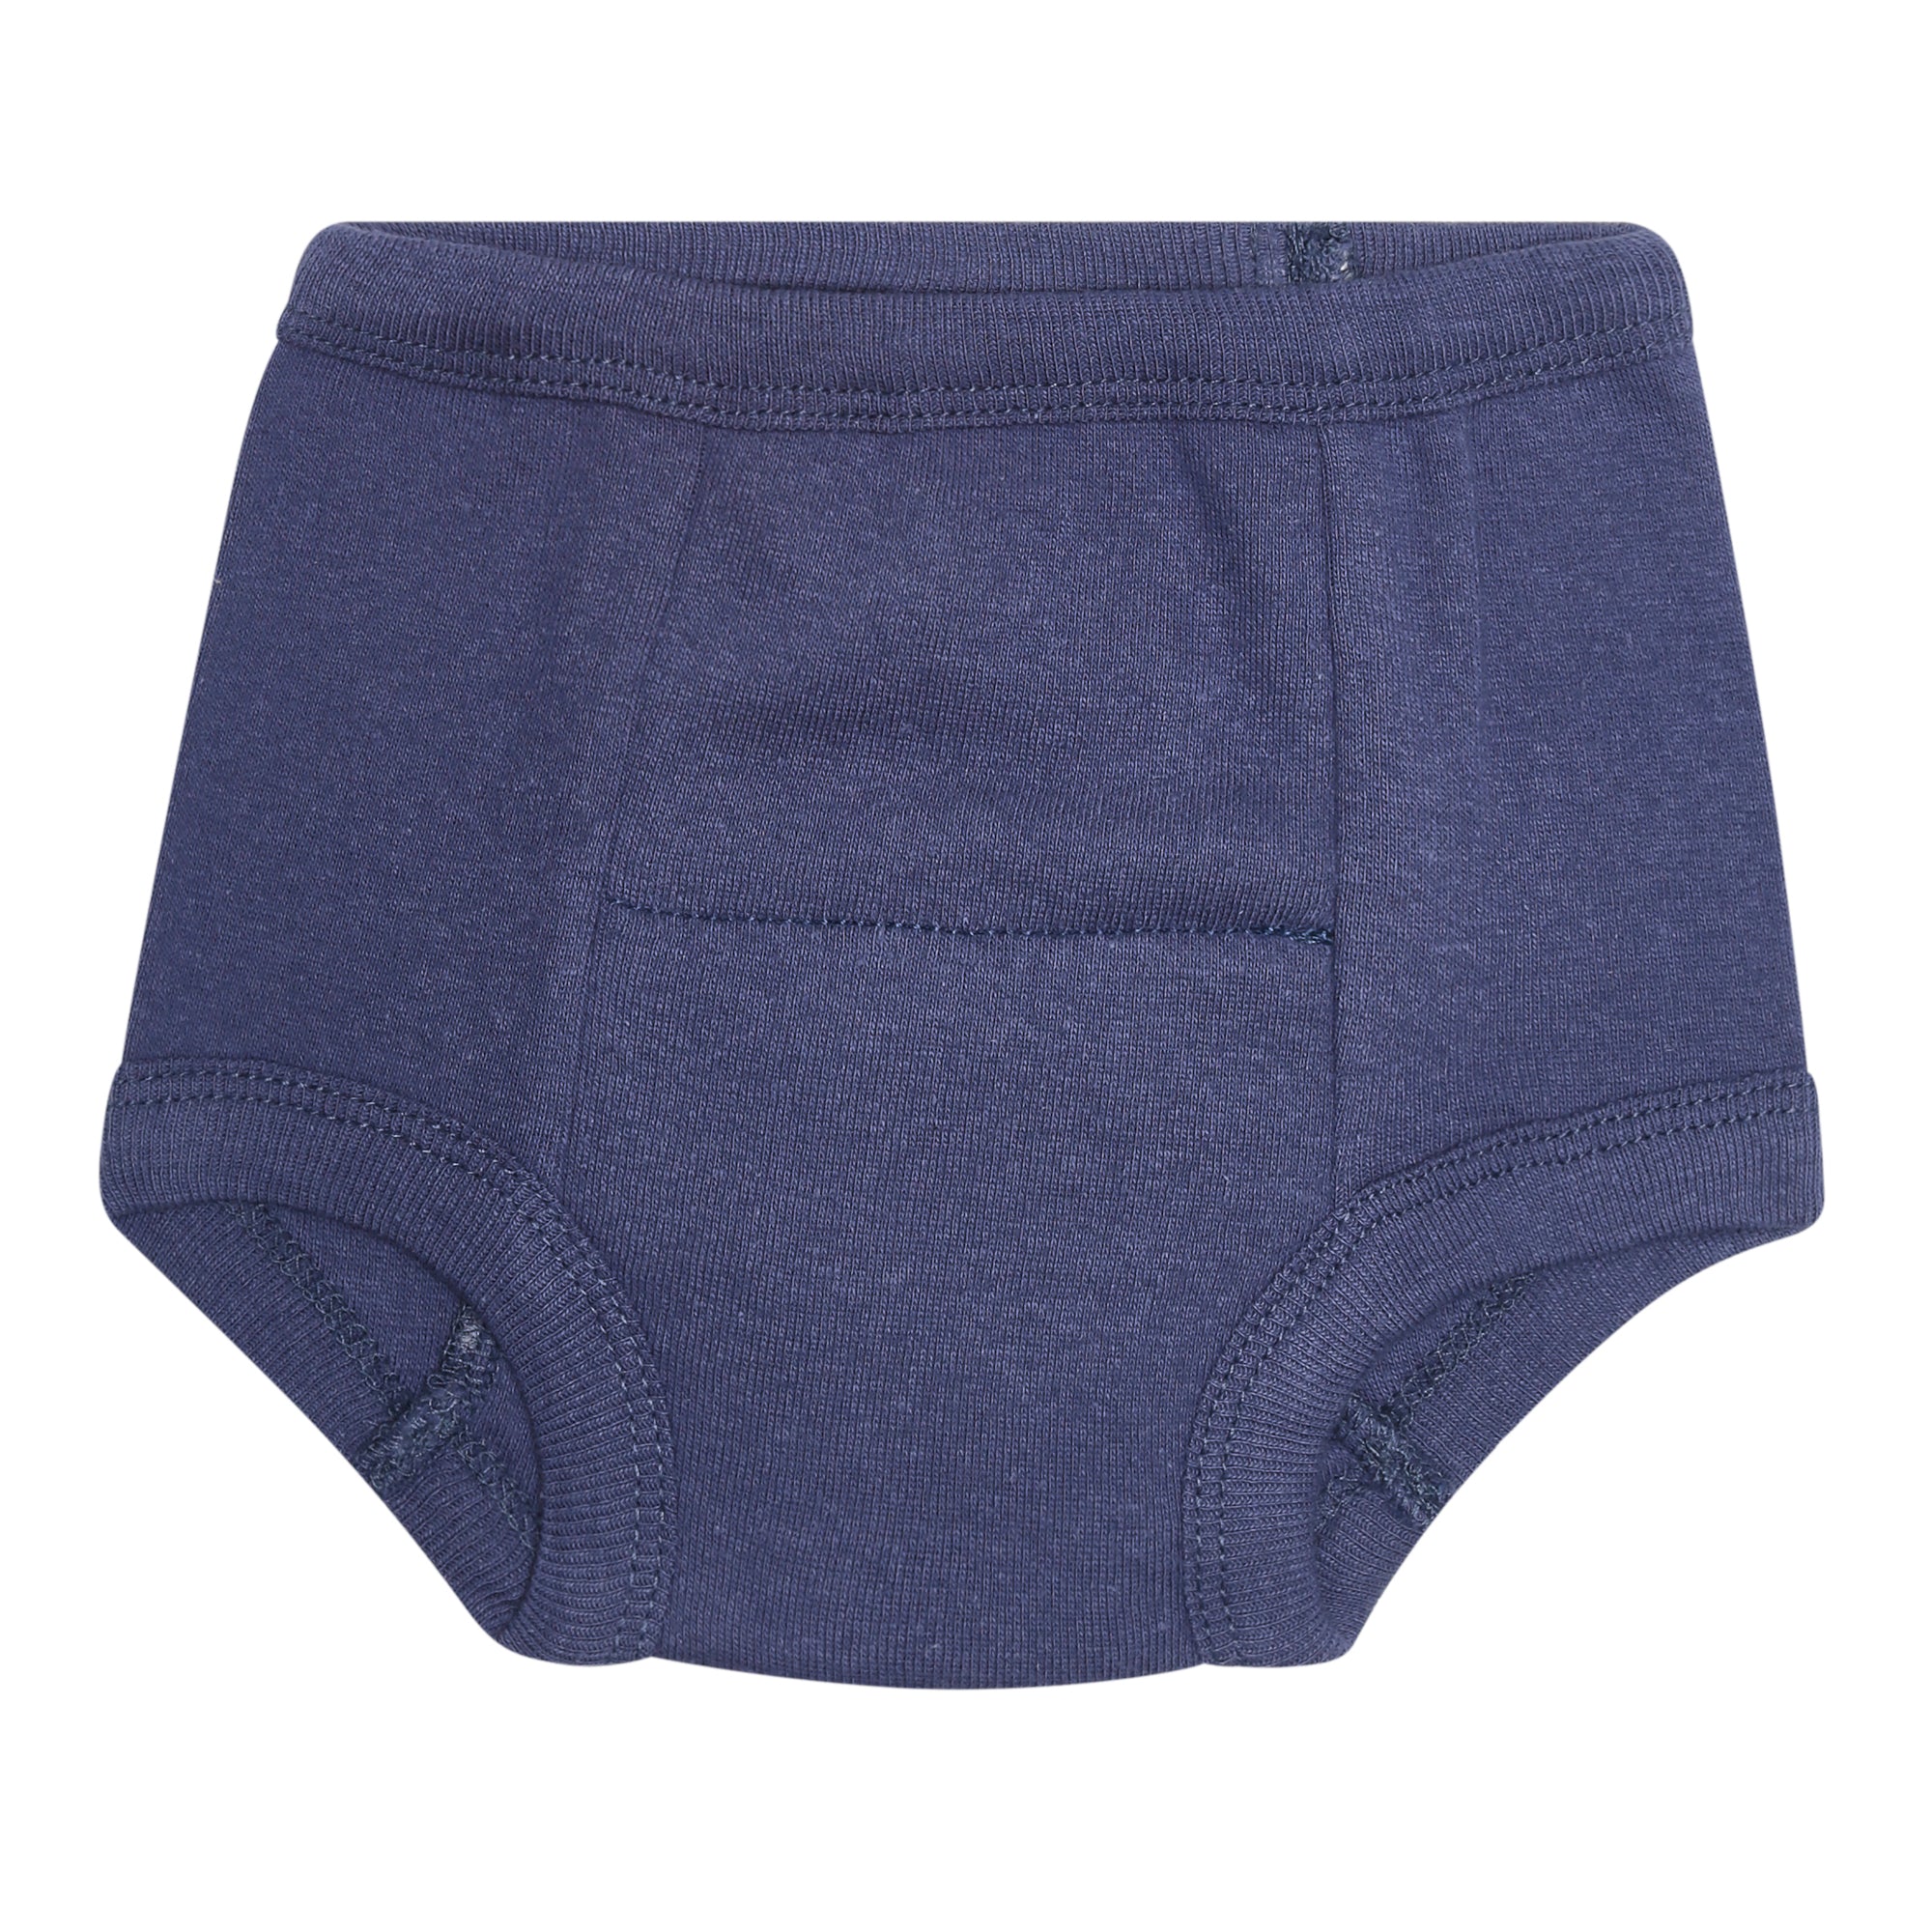  Training Pants 7 Packs Absorbent Toddler Potty Training  Underwear Girls 2T